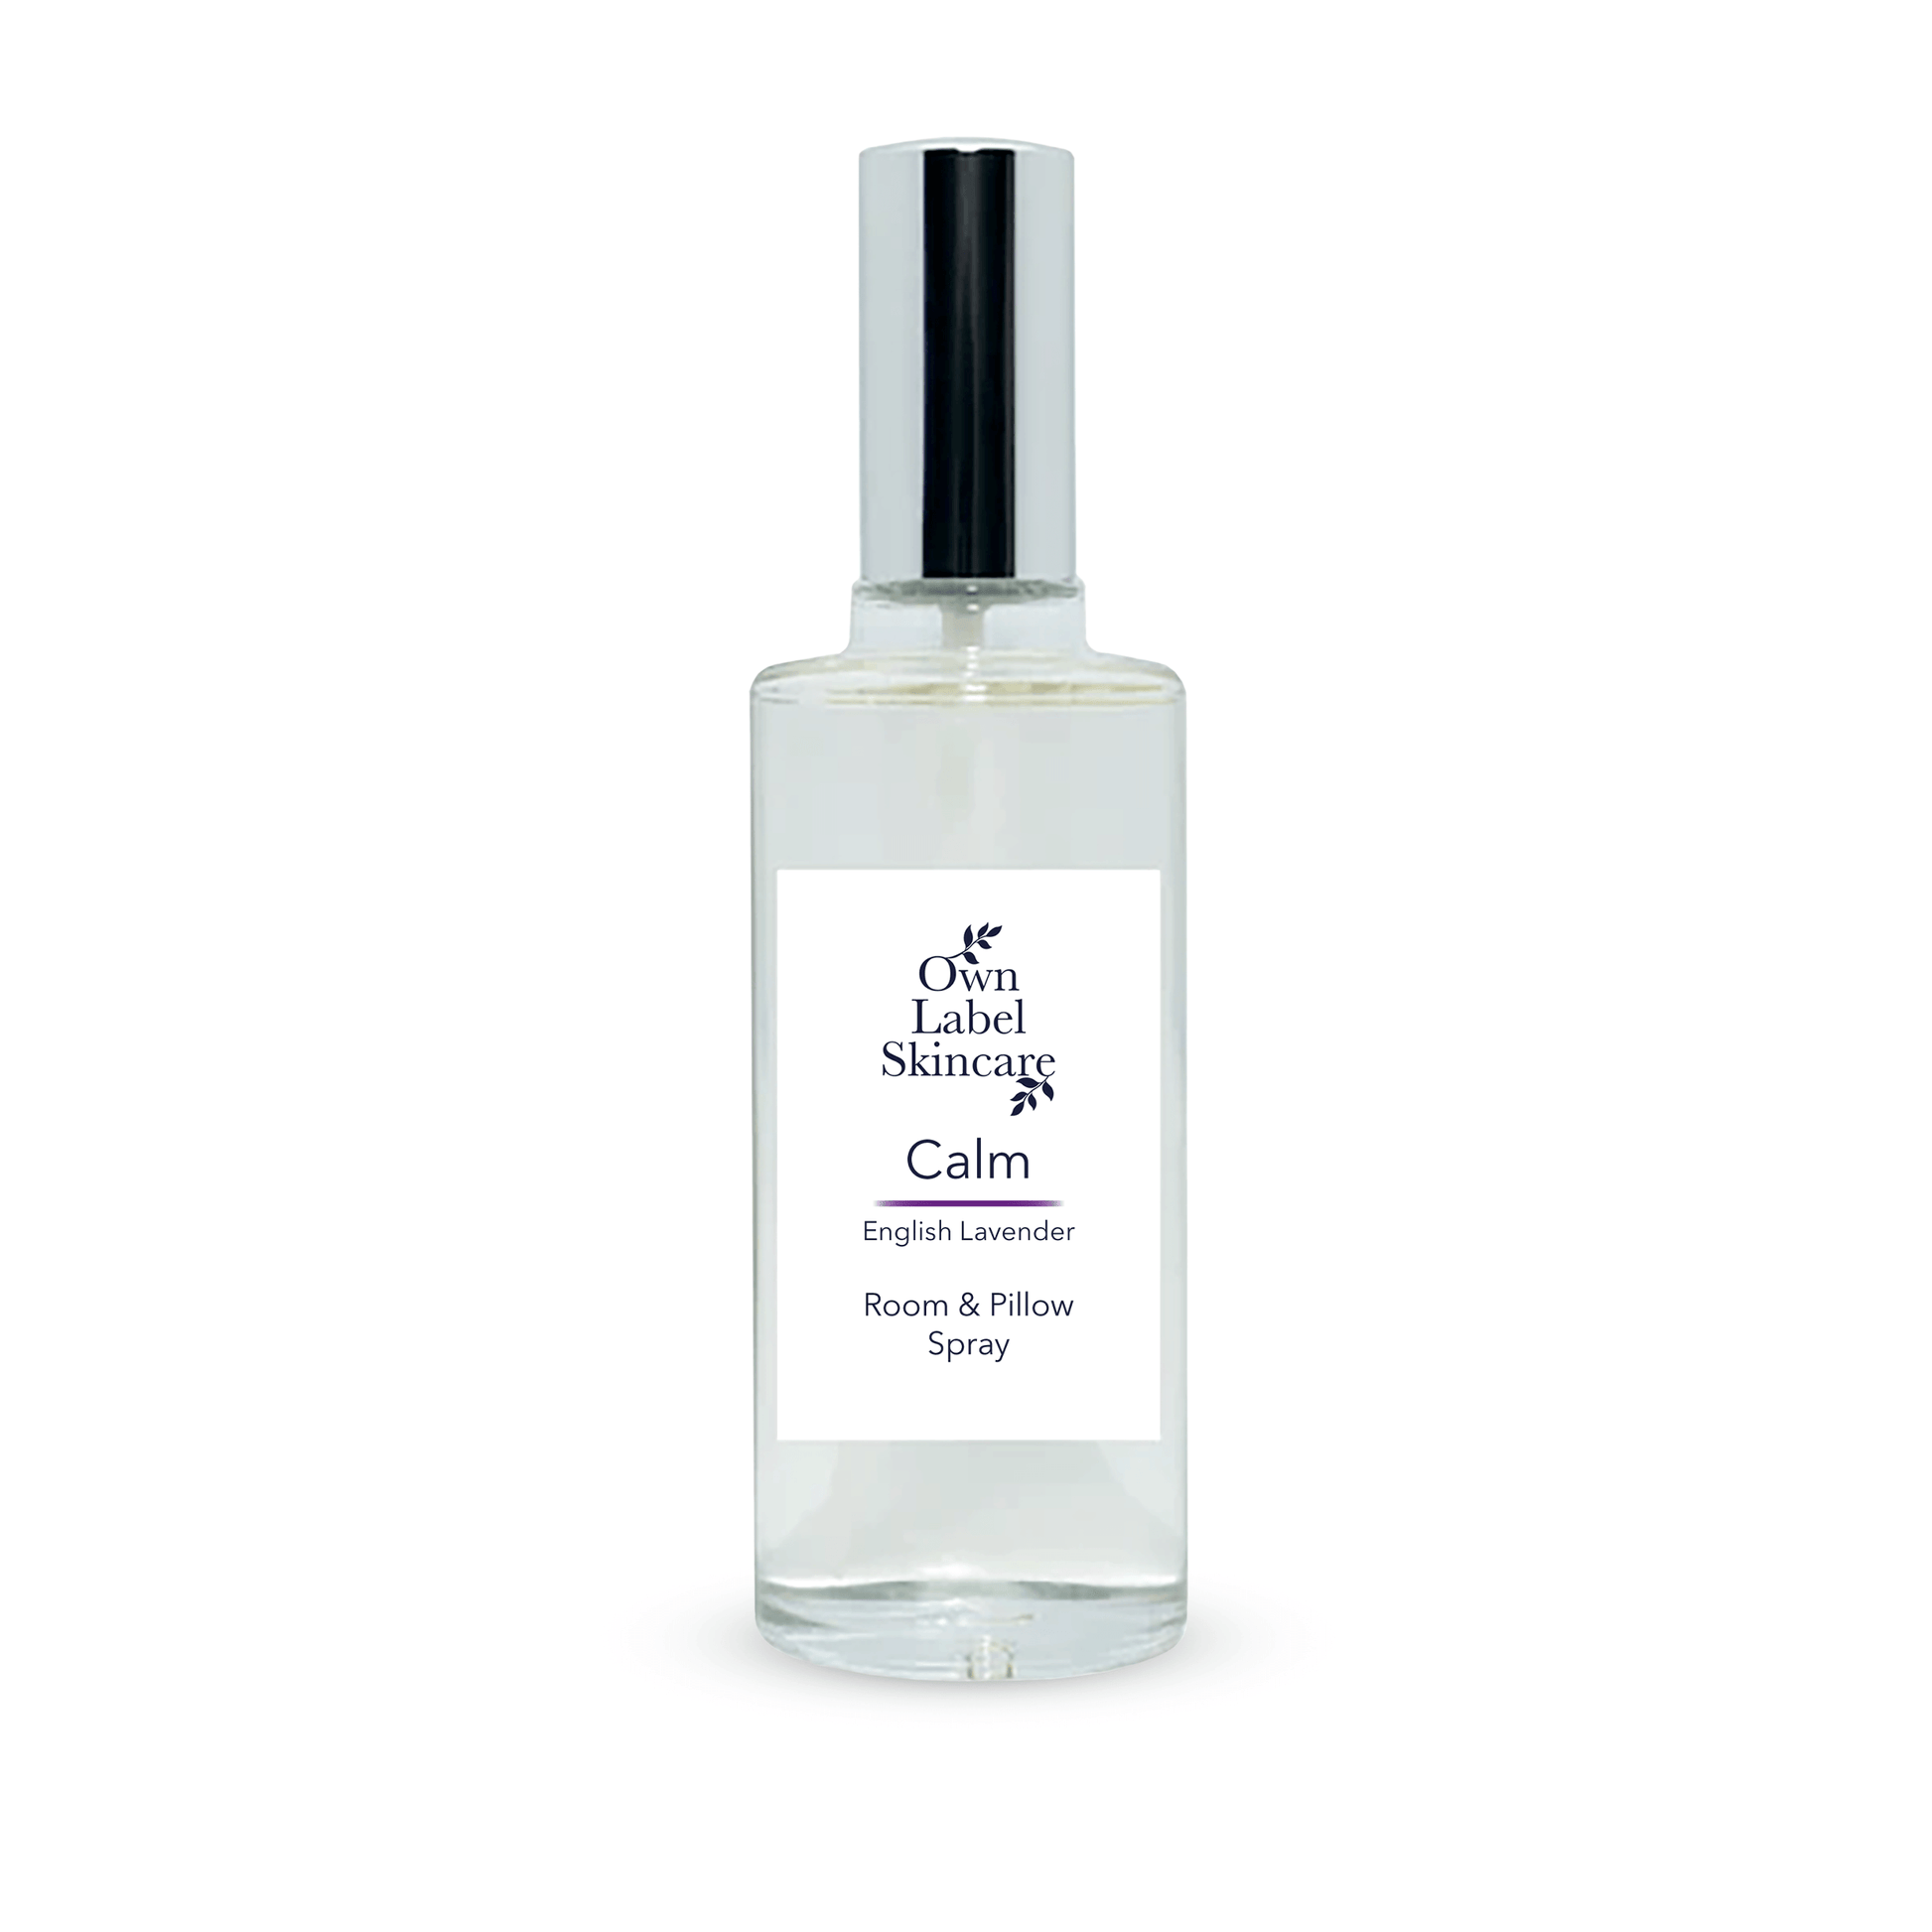 Vegan Room Spray. Calm English Lavender. Own Label Skincare